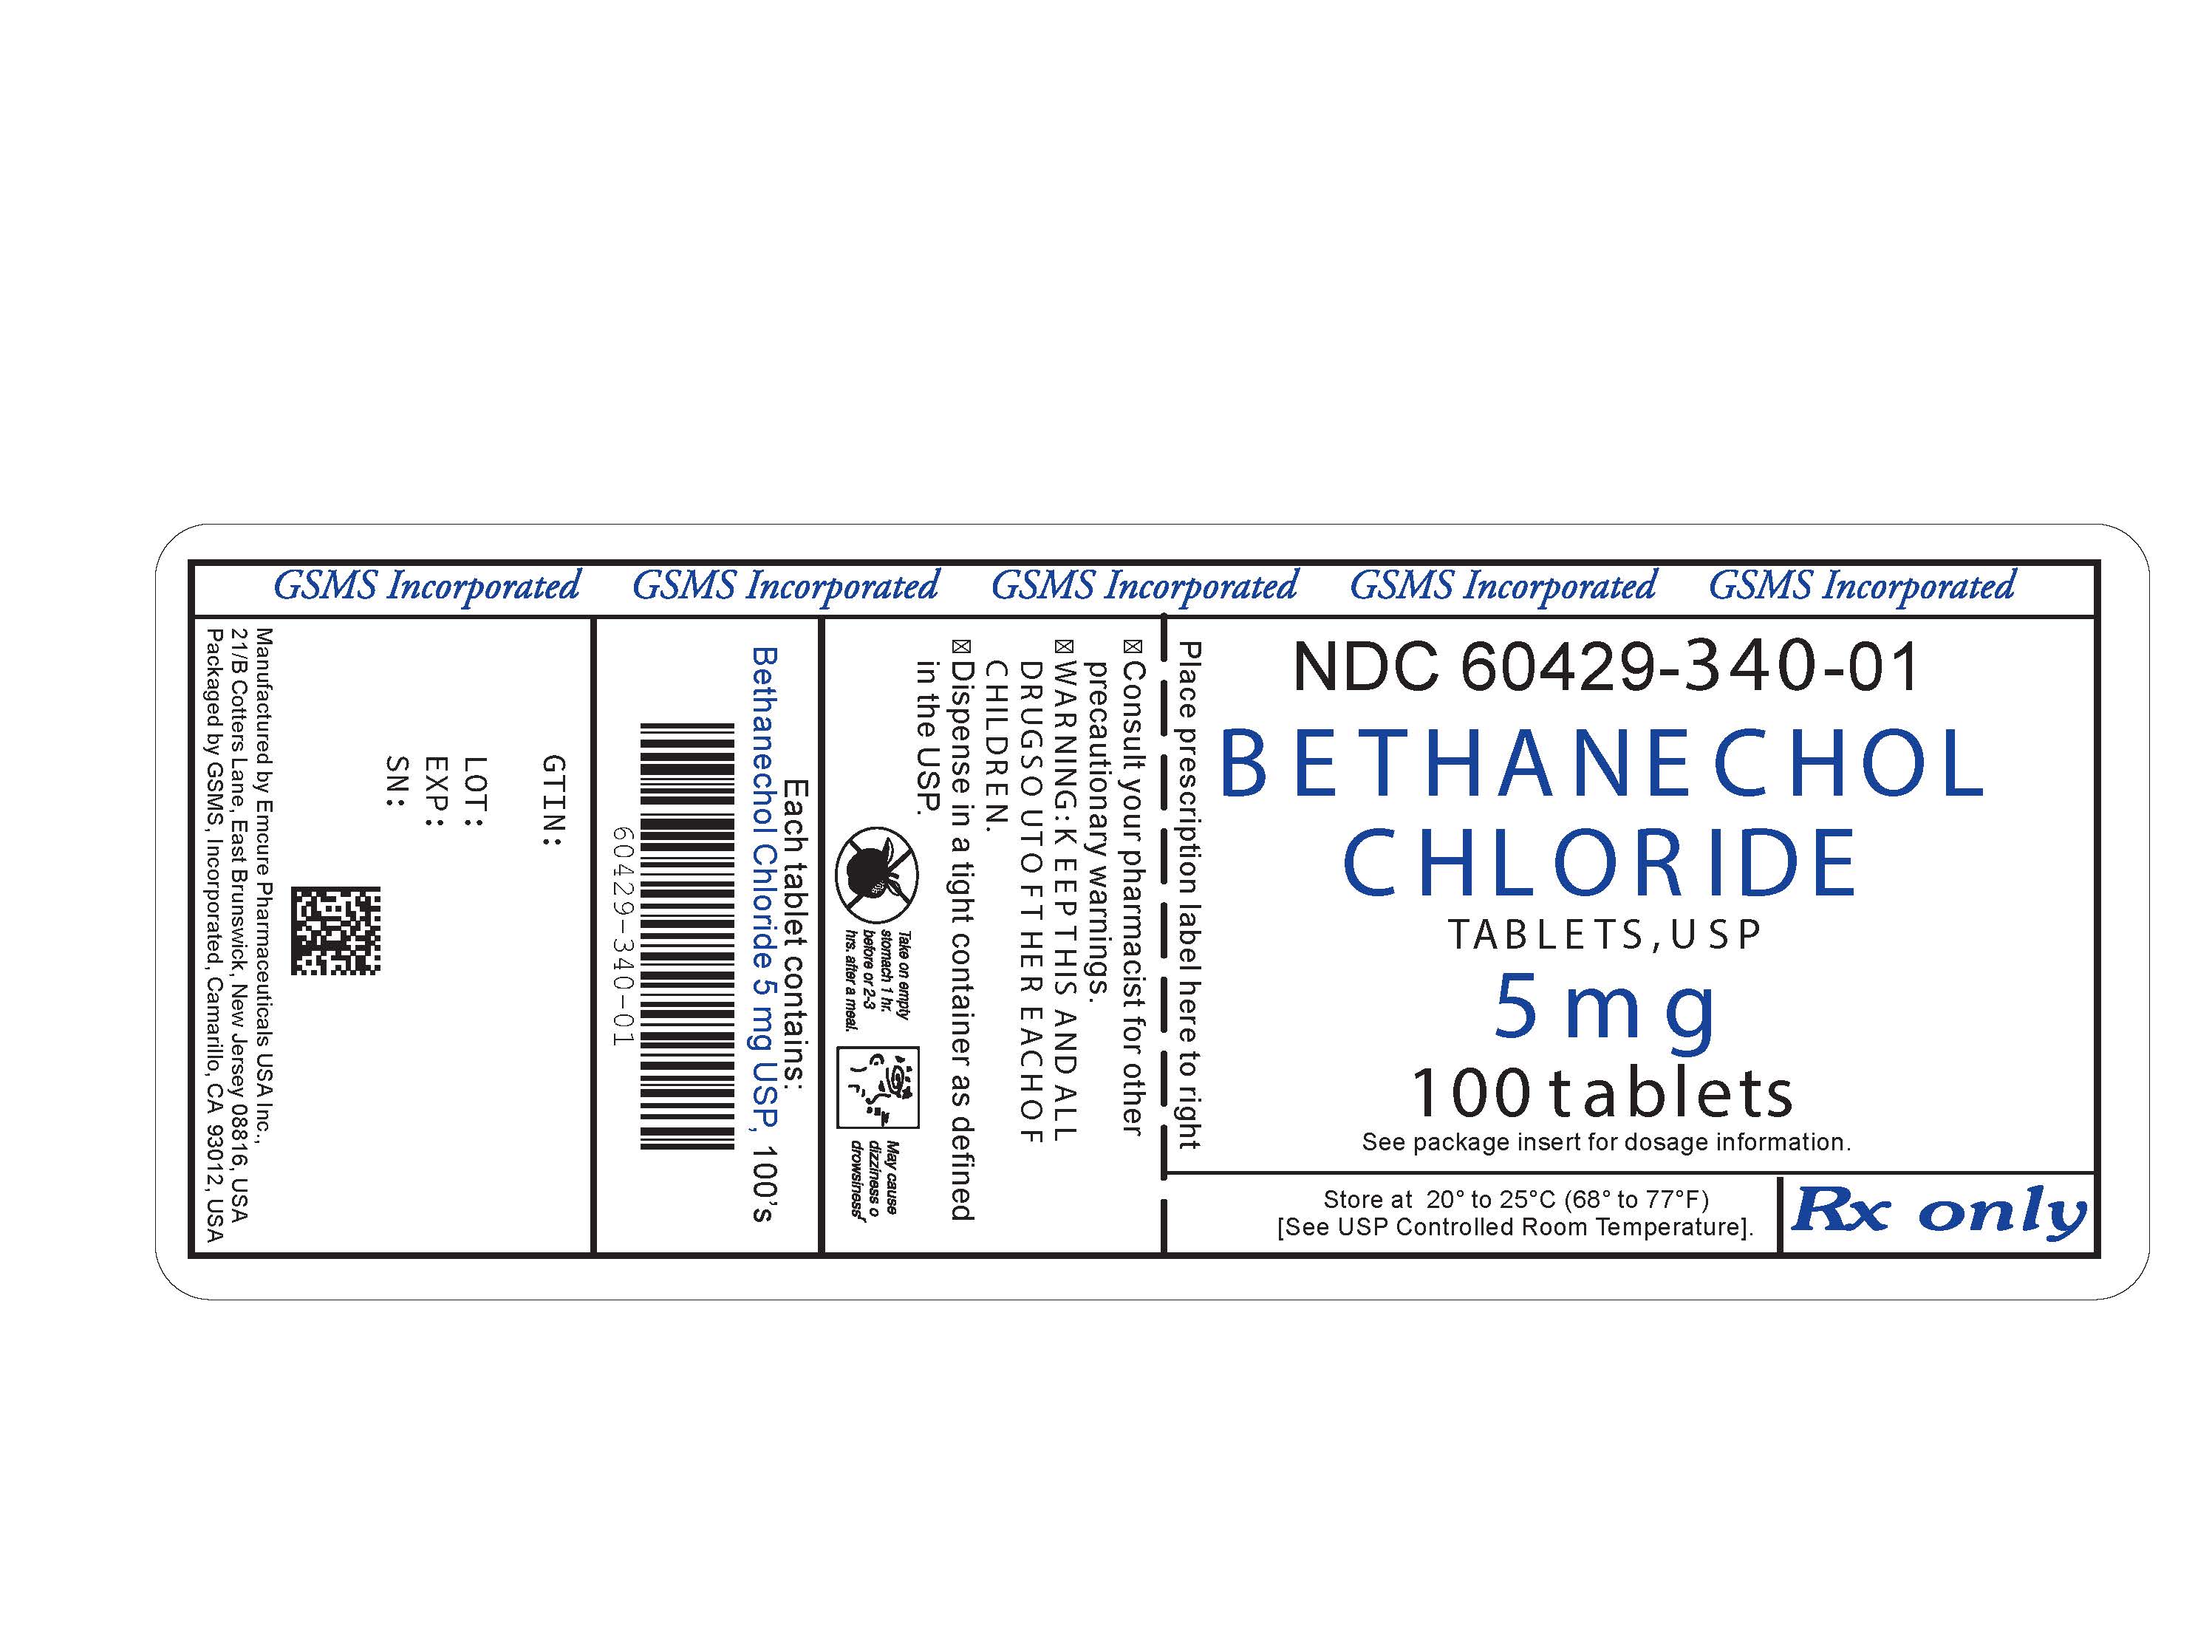 60429-340-01LB - BETHANECHOL CHLORIDE 5 MG TABLETS.jpg